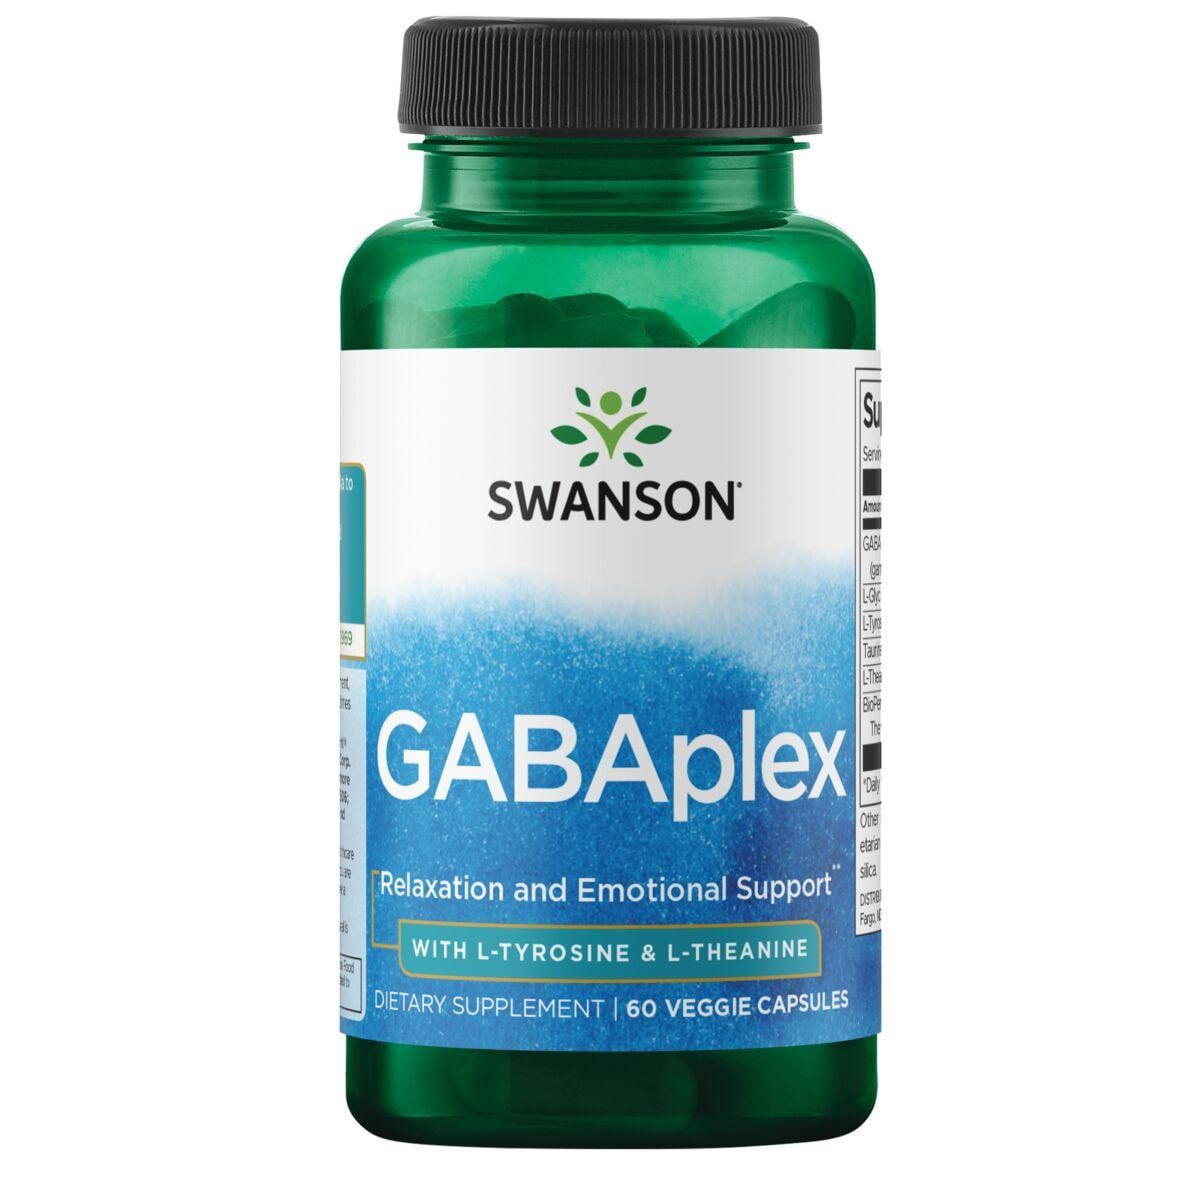 Swanson Ultra Gabaplex with L-Tyrosine & L-Theanine Supplement Vitamin | 60 Veg Caps